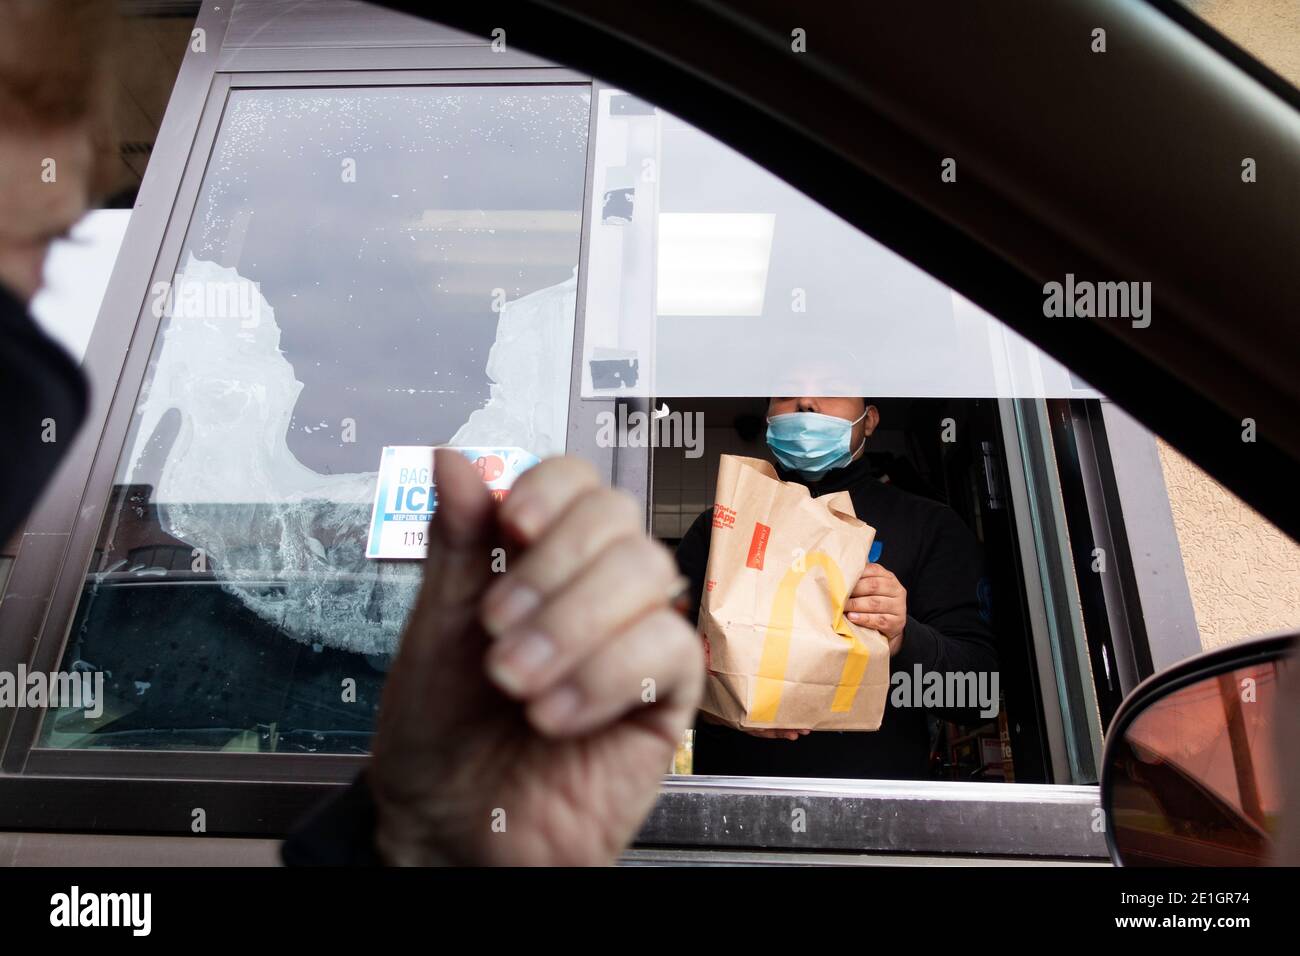 Essen bei McDonald's abholen, während man wegen der Covid-Pandemie Masken trägt. St. Paul Minnesota, USA Stockfoto